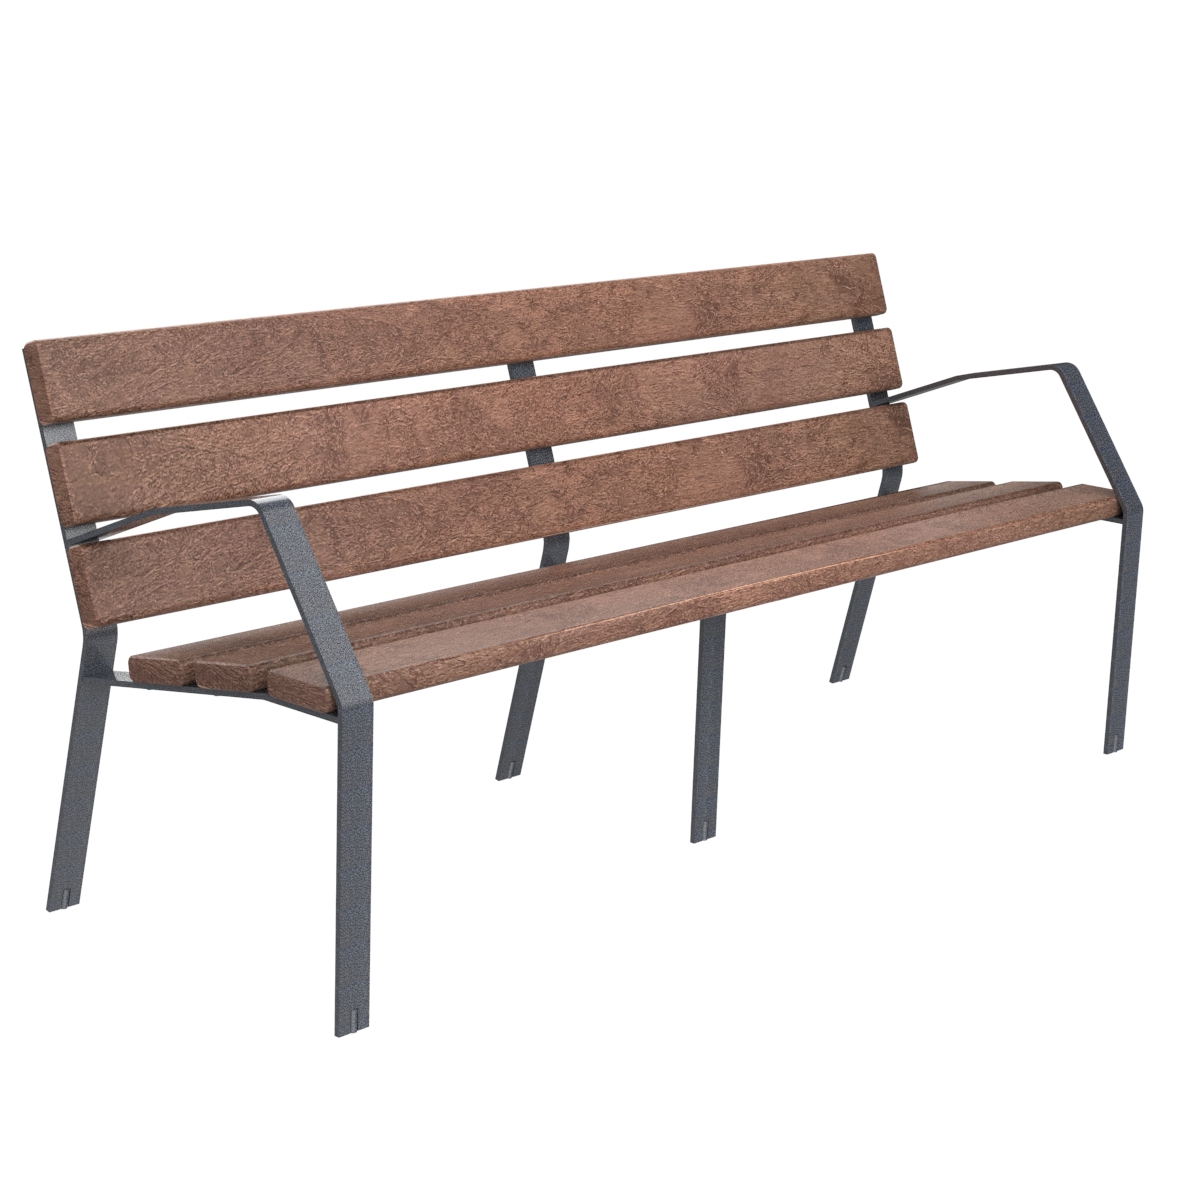 MODO08-1800A-PRM eco-friendly bench